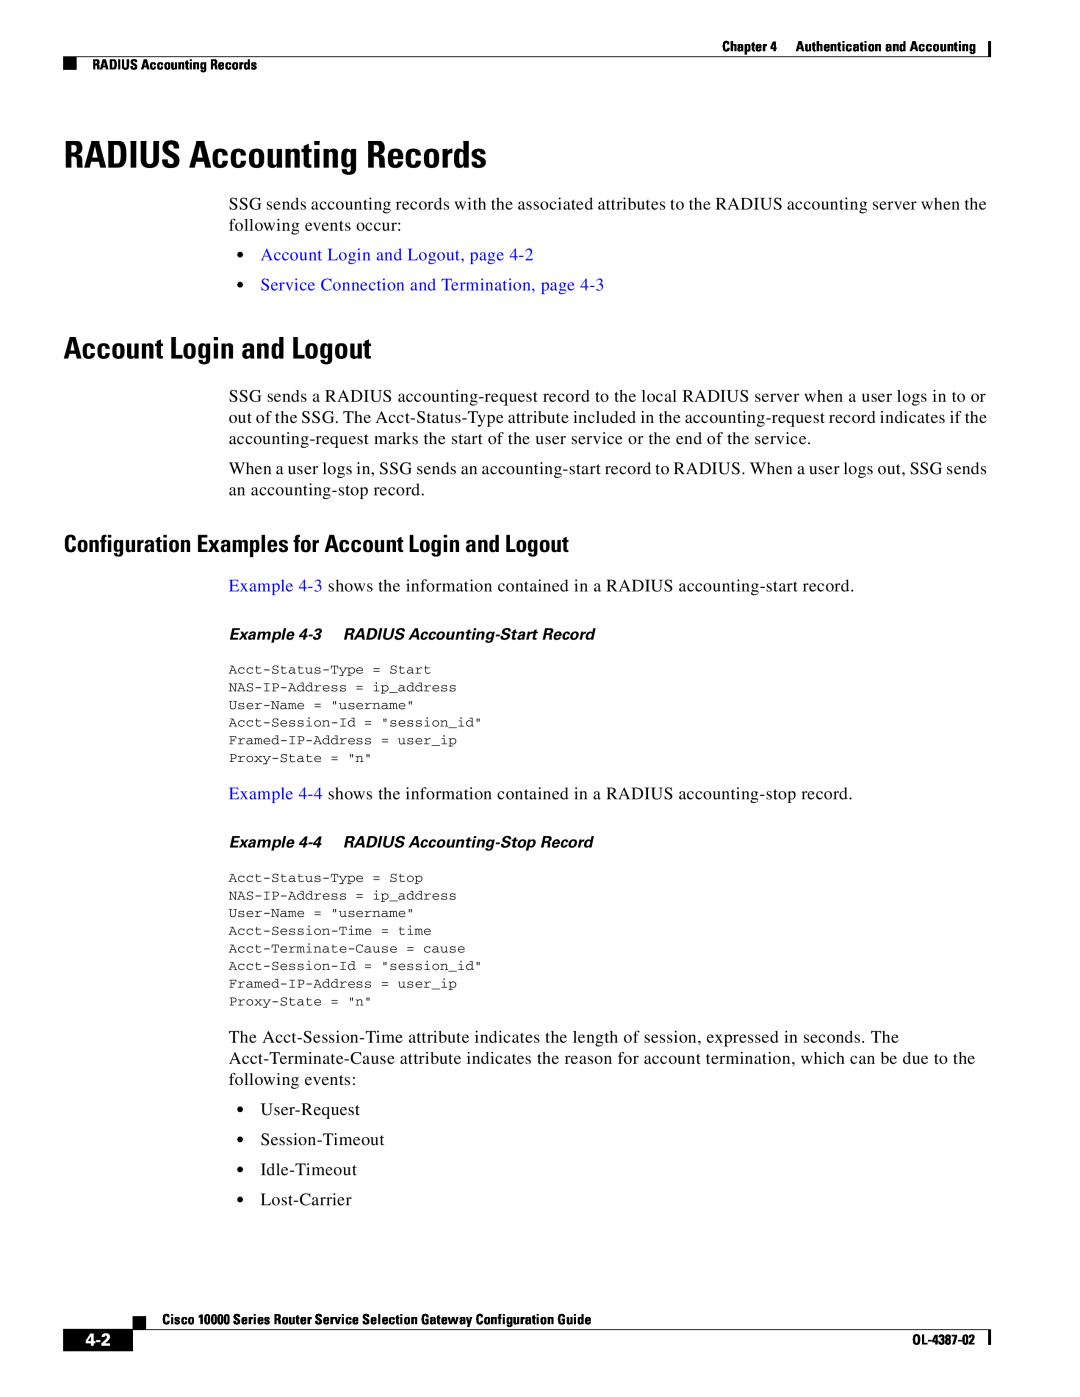 Cisco Systems OL-4387-02 manual RADIUS Accounting Records, Account Login and Logout, page 